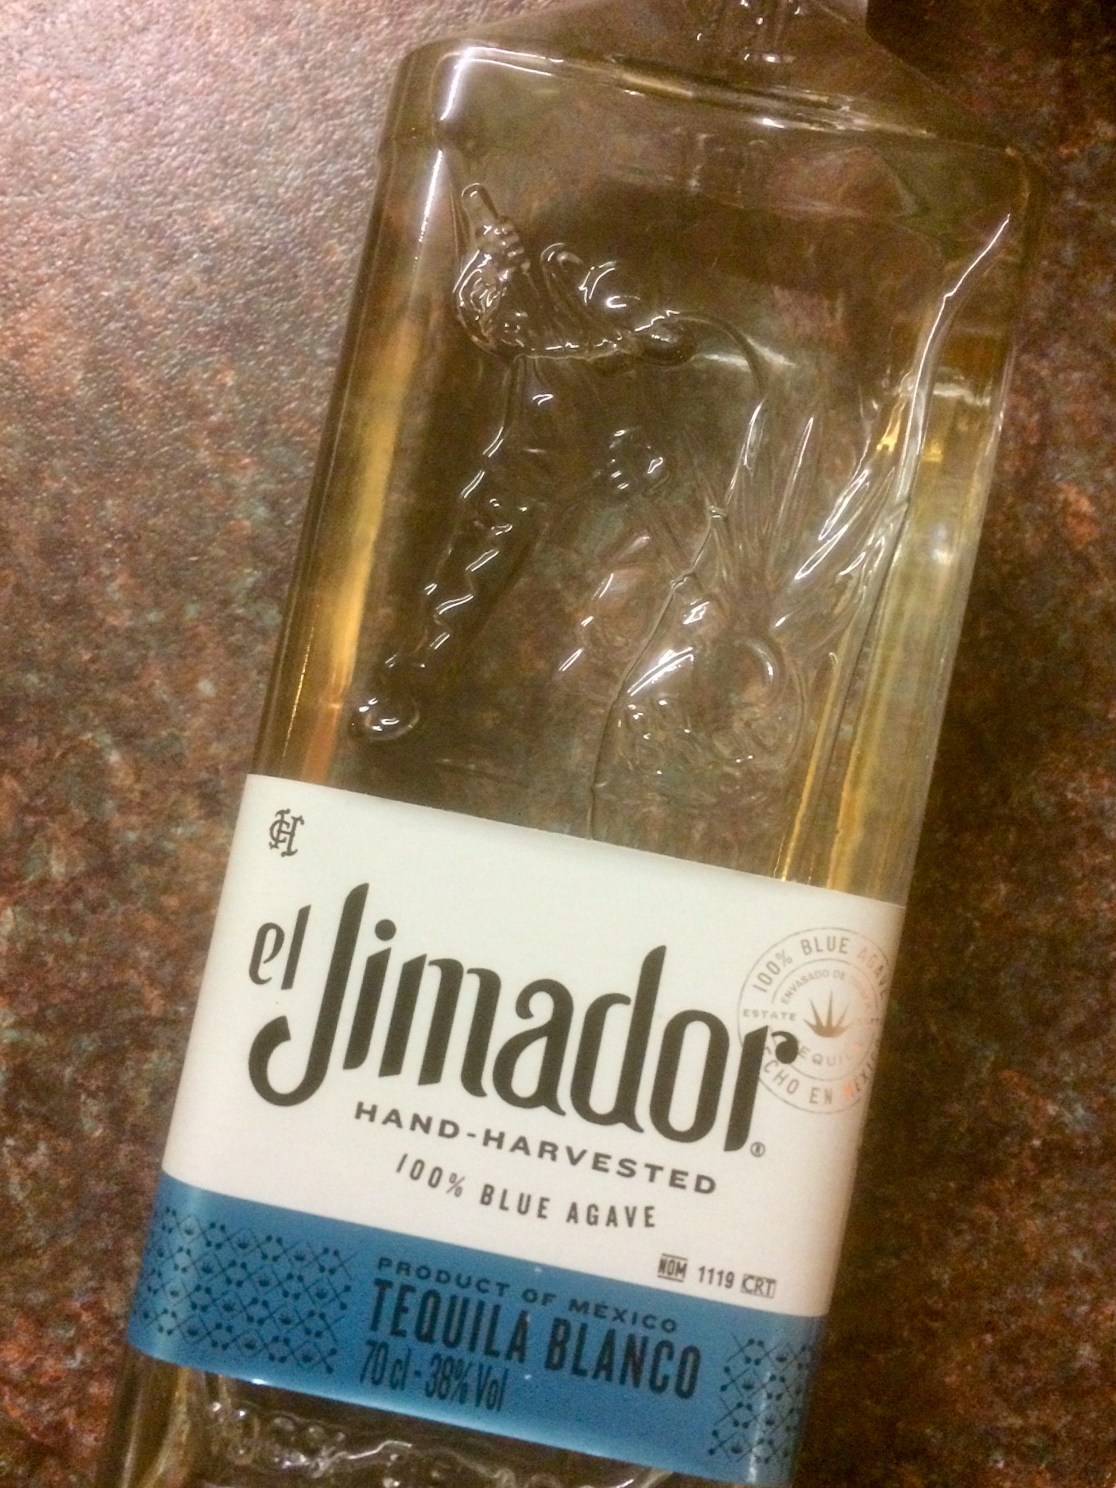 El Jimador, Tequila Blanco, 38% | WestmeathWhiskeyWorld